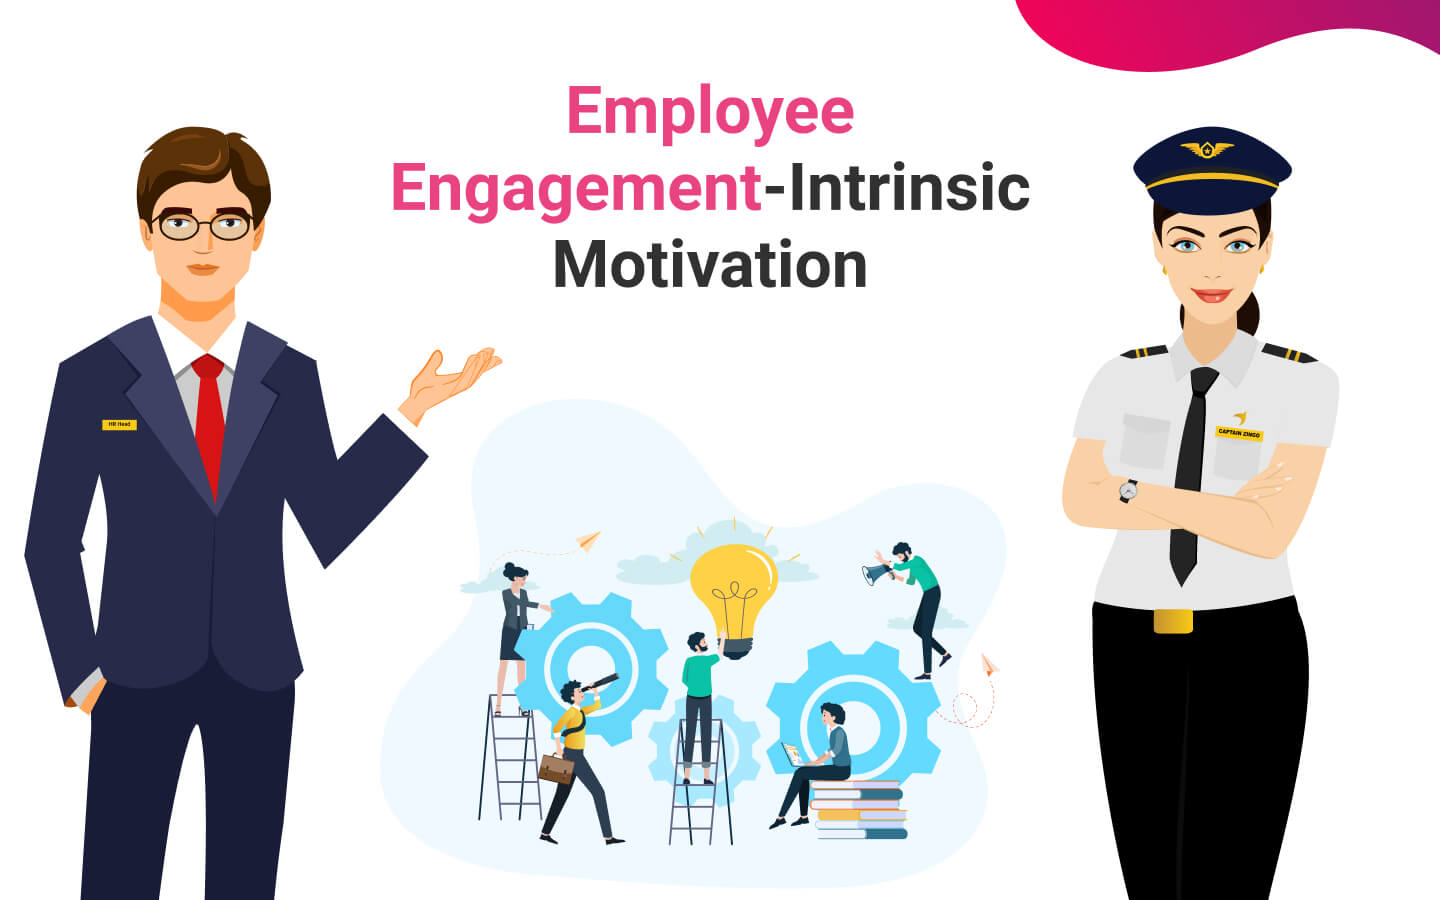 Employee Engagement-Intrinsic Motivation